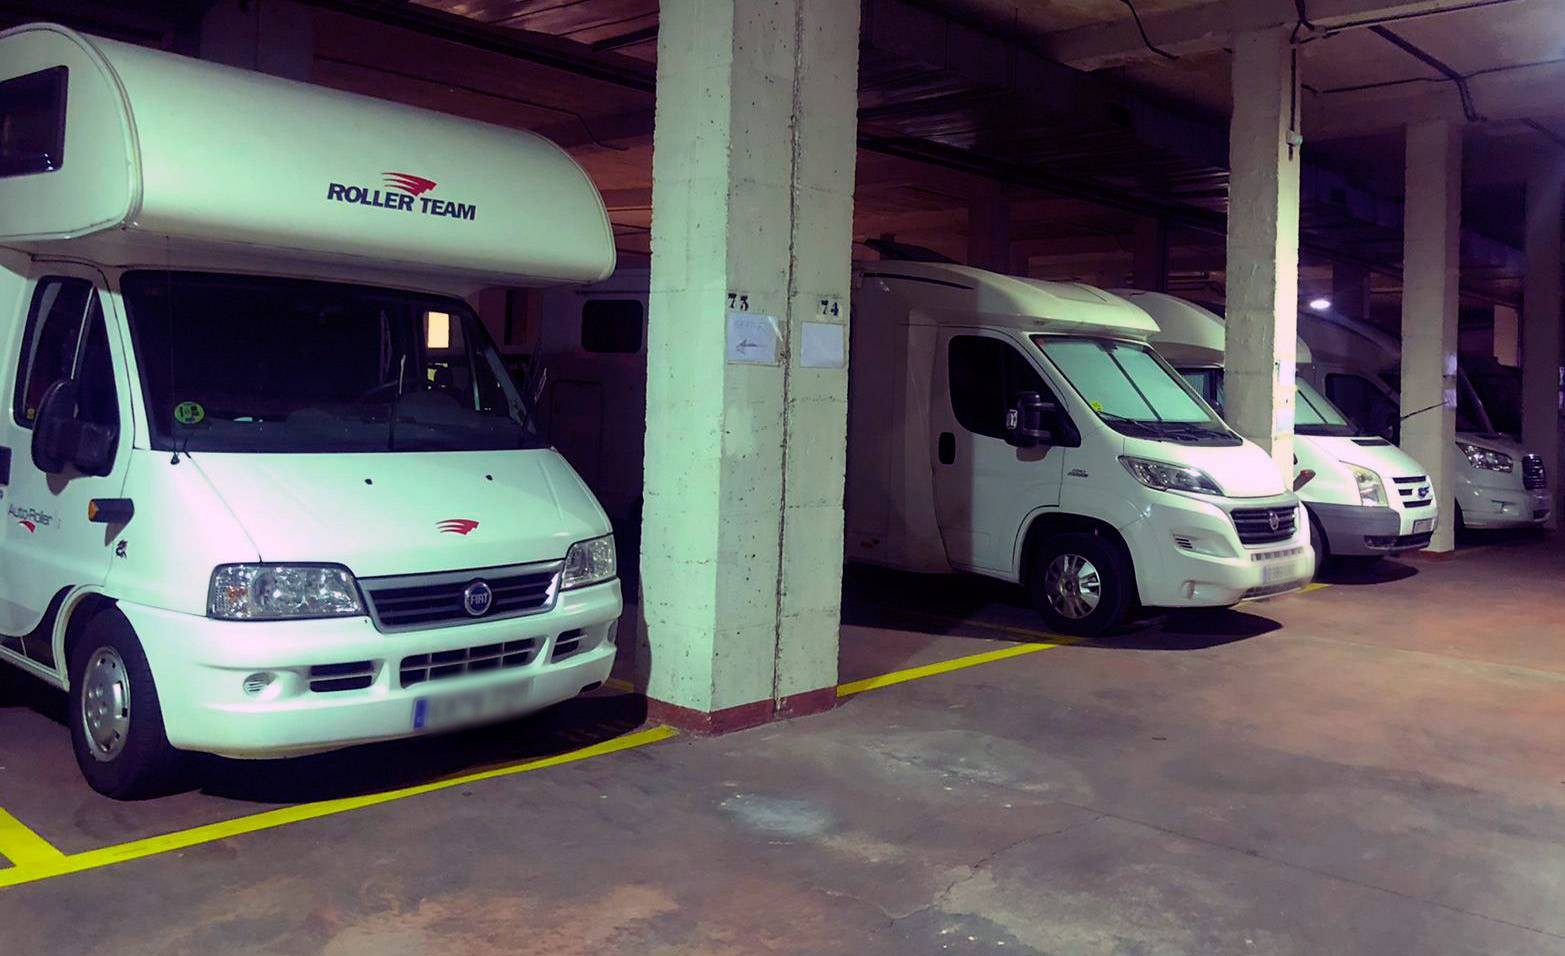 Parking caravanas y autocaravanas en Madrid - Oppad